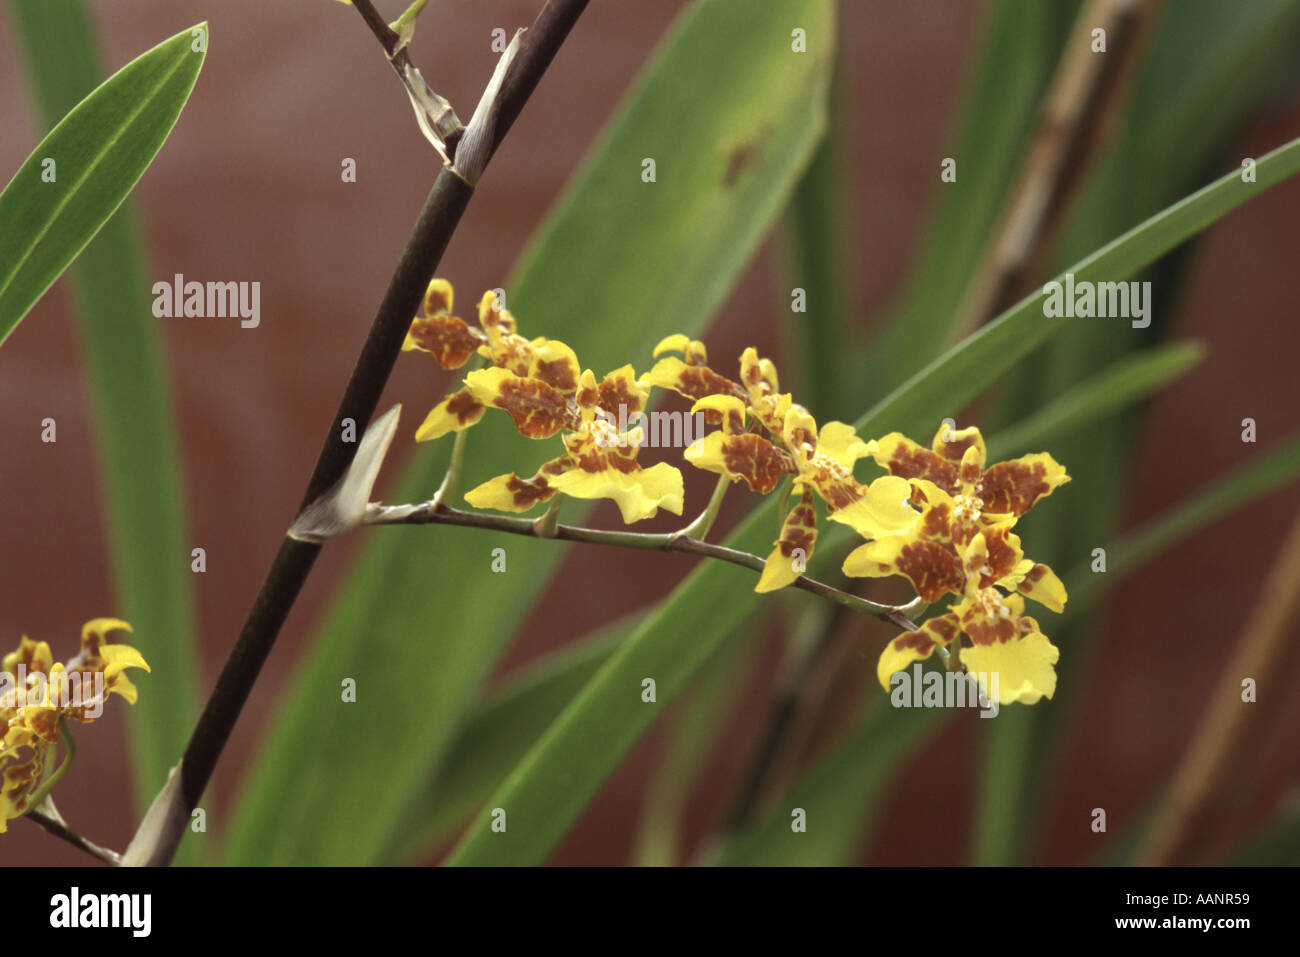 Oncidium sphacelatum aff Stock Photo - Alamy